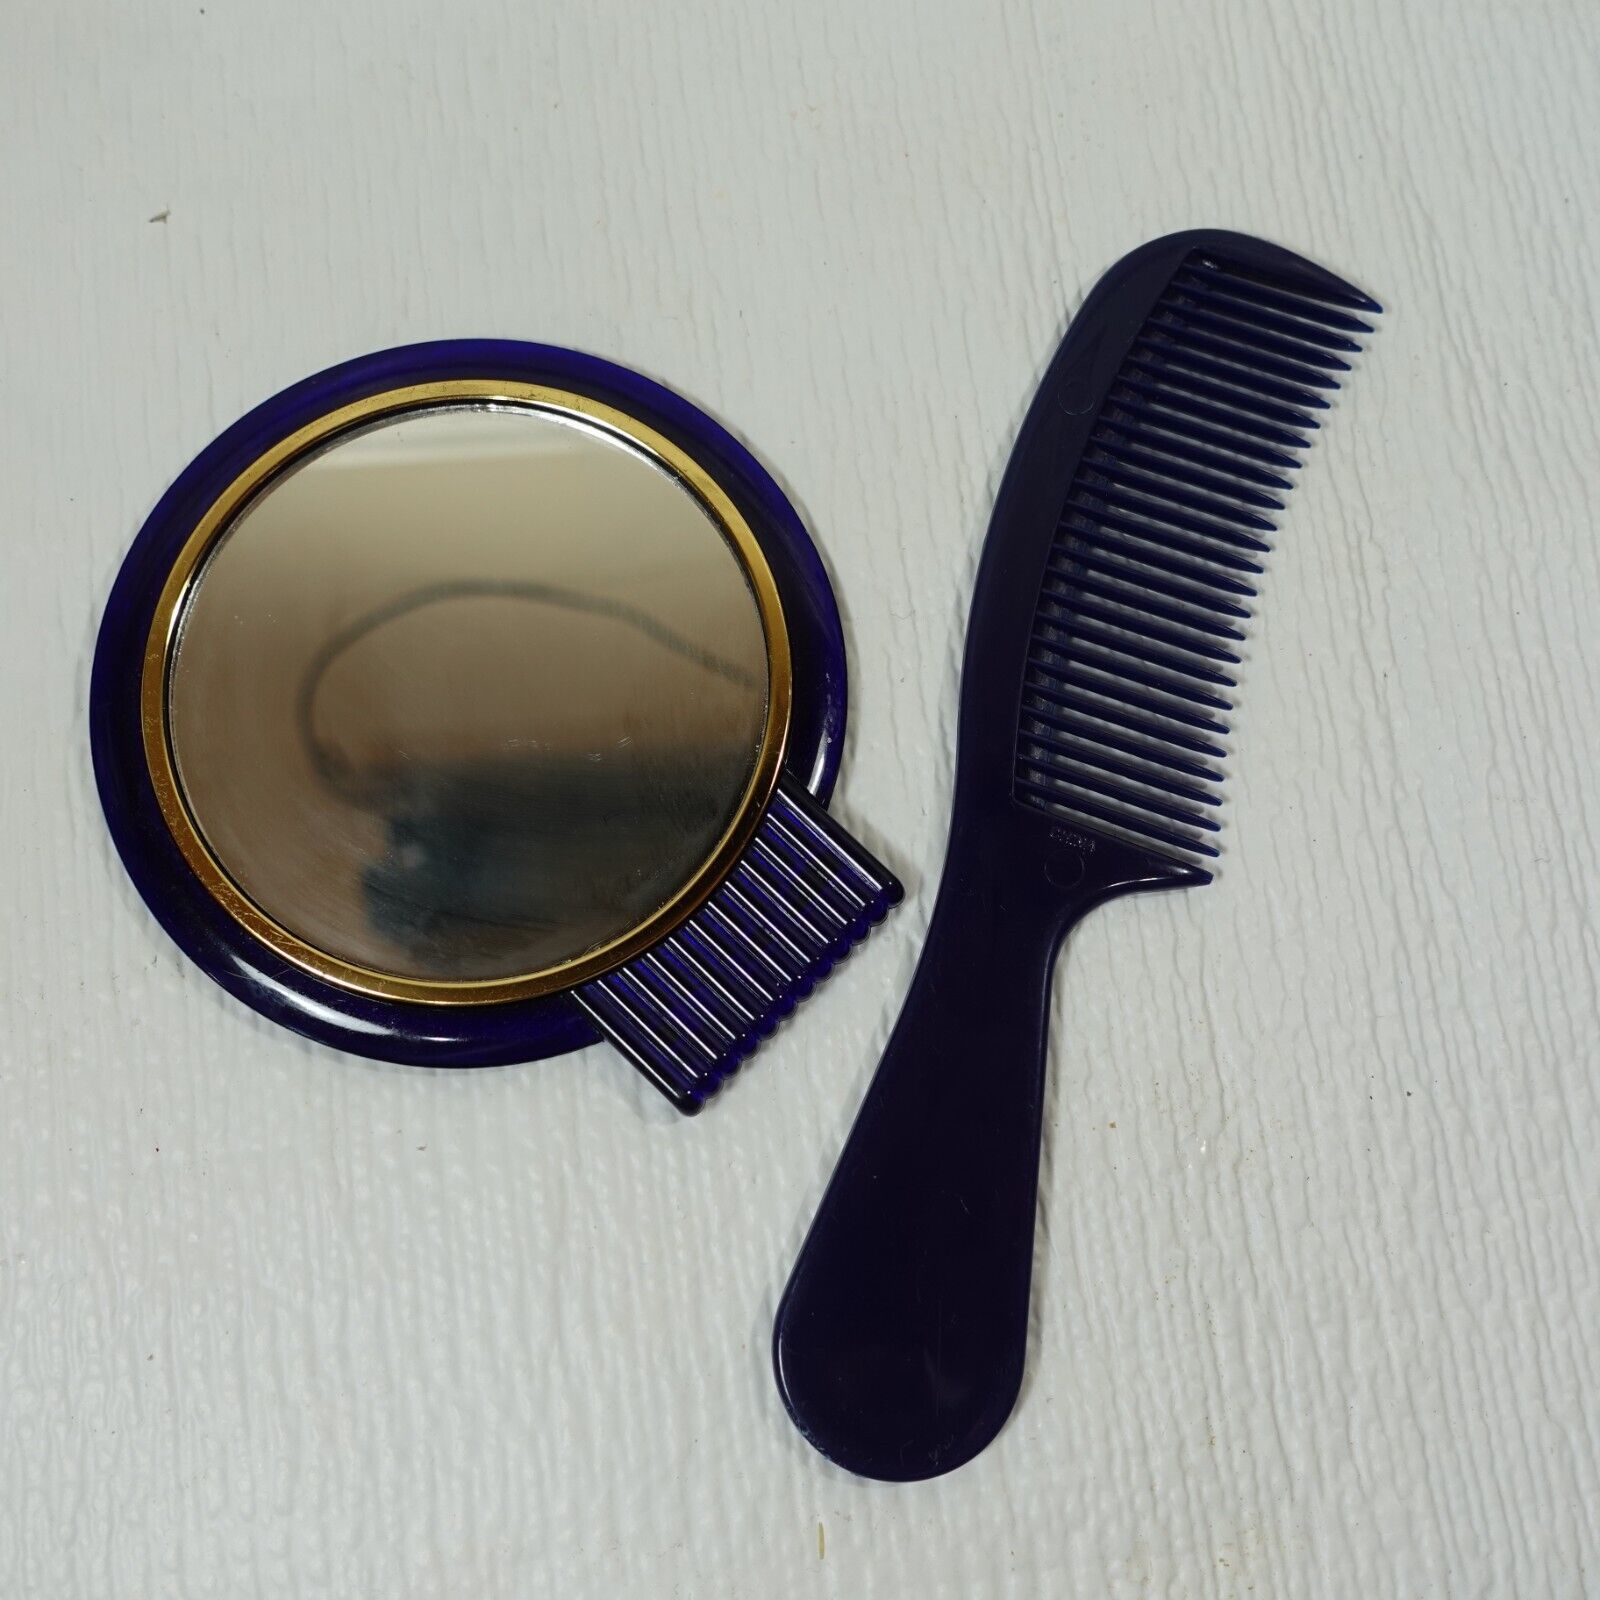 Vintage ESTEE LAUDER hair comb & mirror small purse Travel Size blue gold trim - $32.00